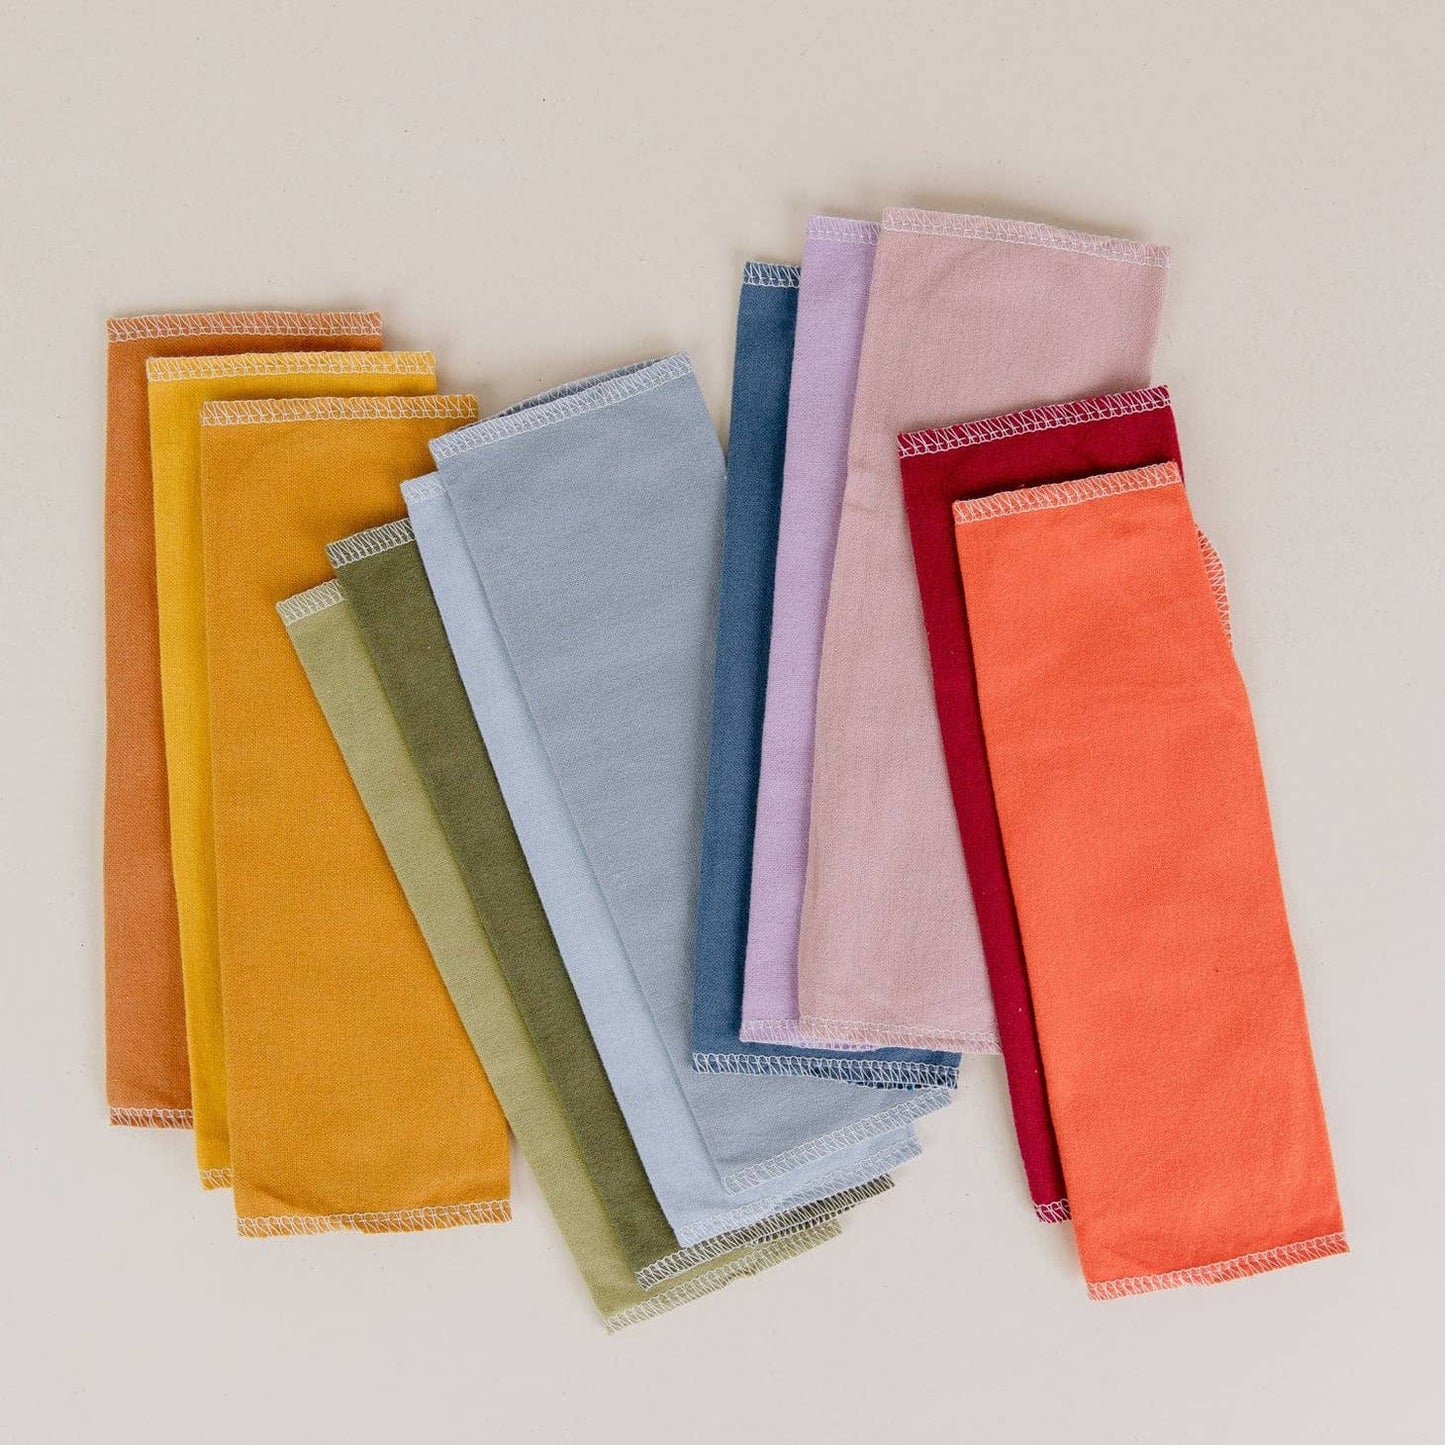 12pc Organic Reusable Paper Towels